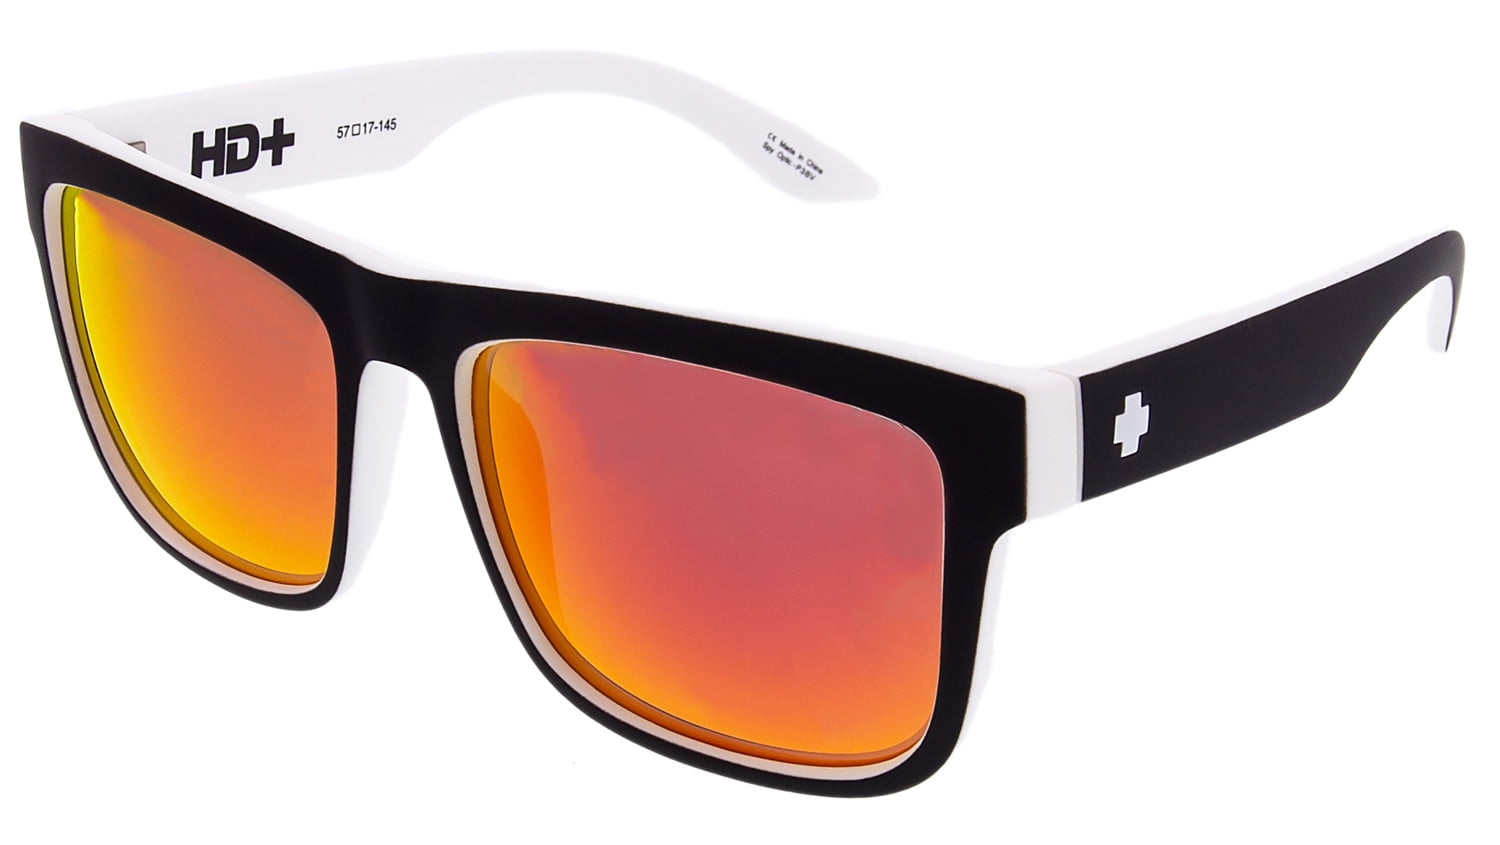 Spy Spy Sunglasses 673119209365 Discord Hd Plus Mirrored Lenses